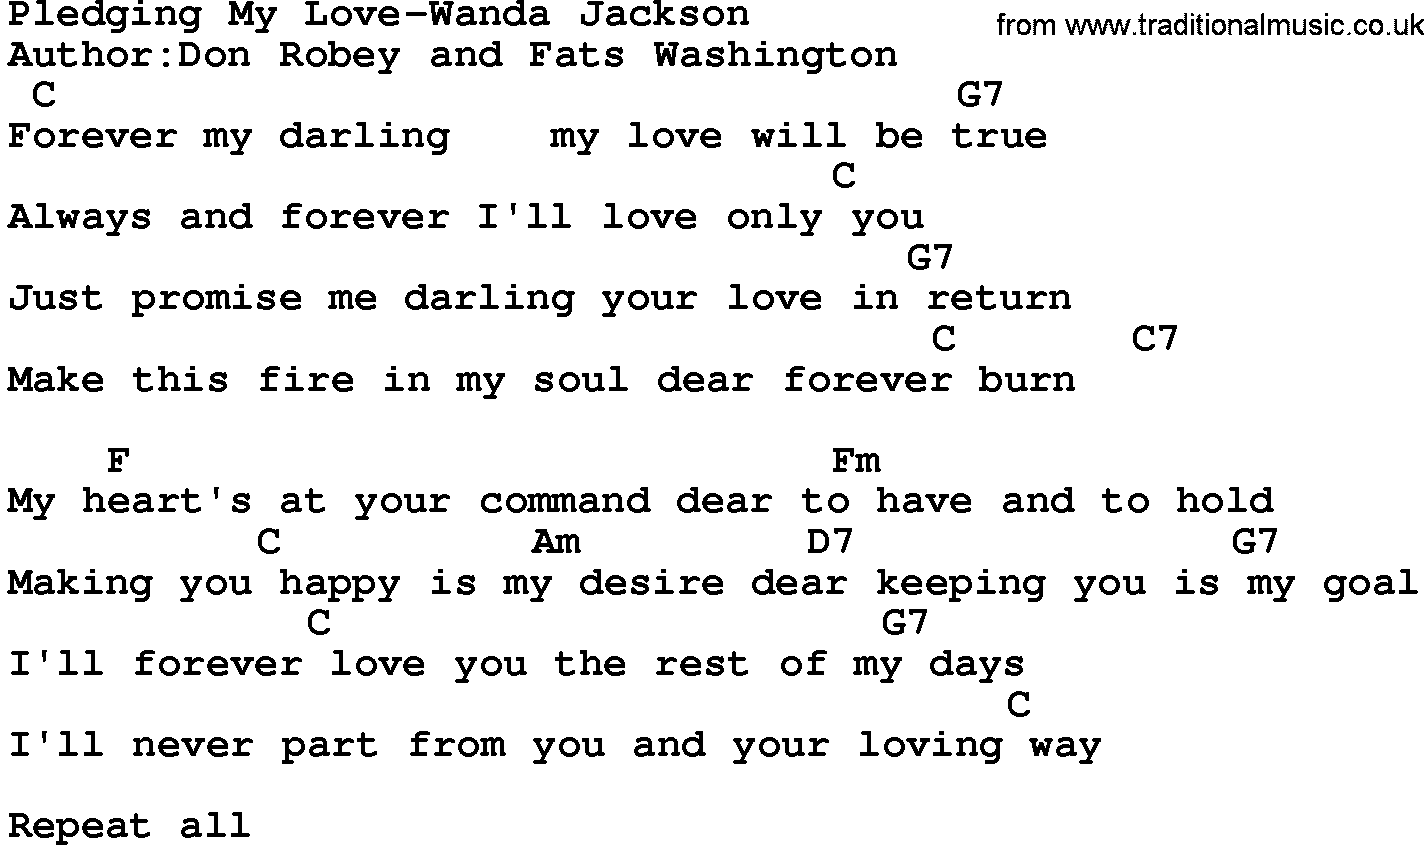 Country music song: Pledging My Love-Wanda Jackson lyrics and chords